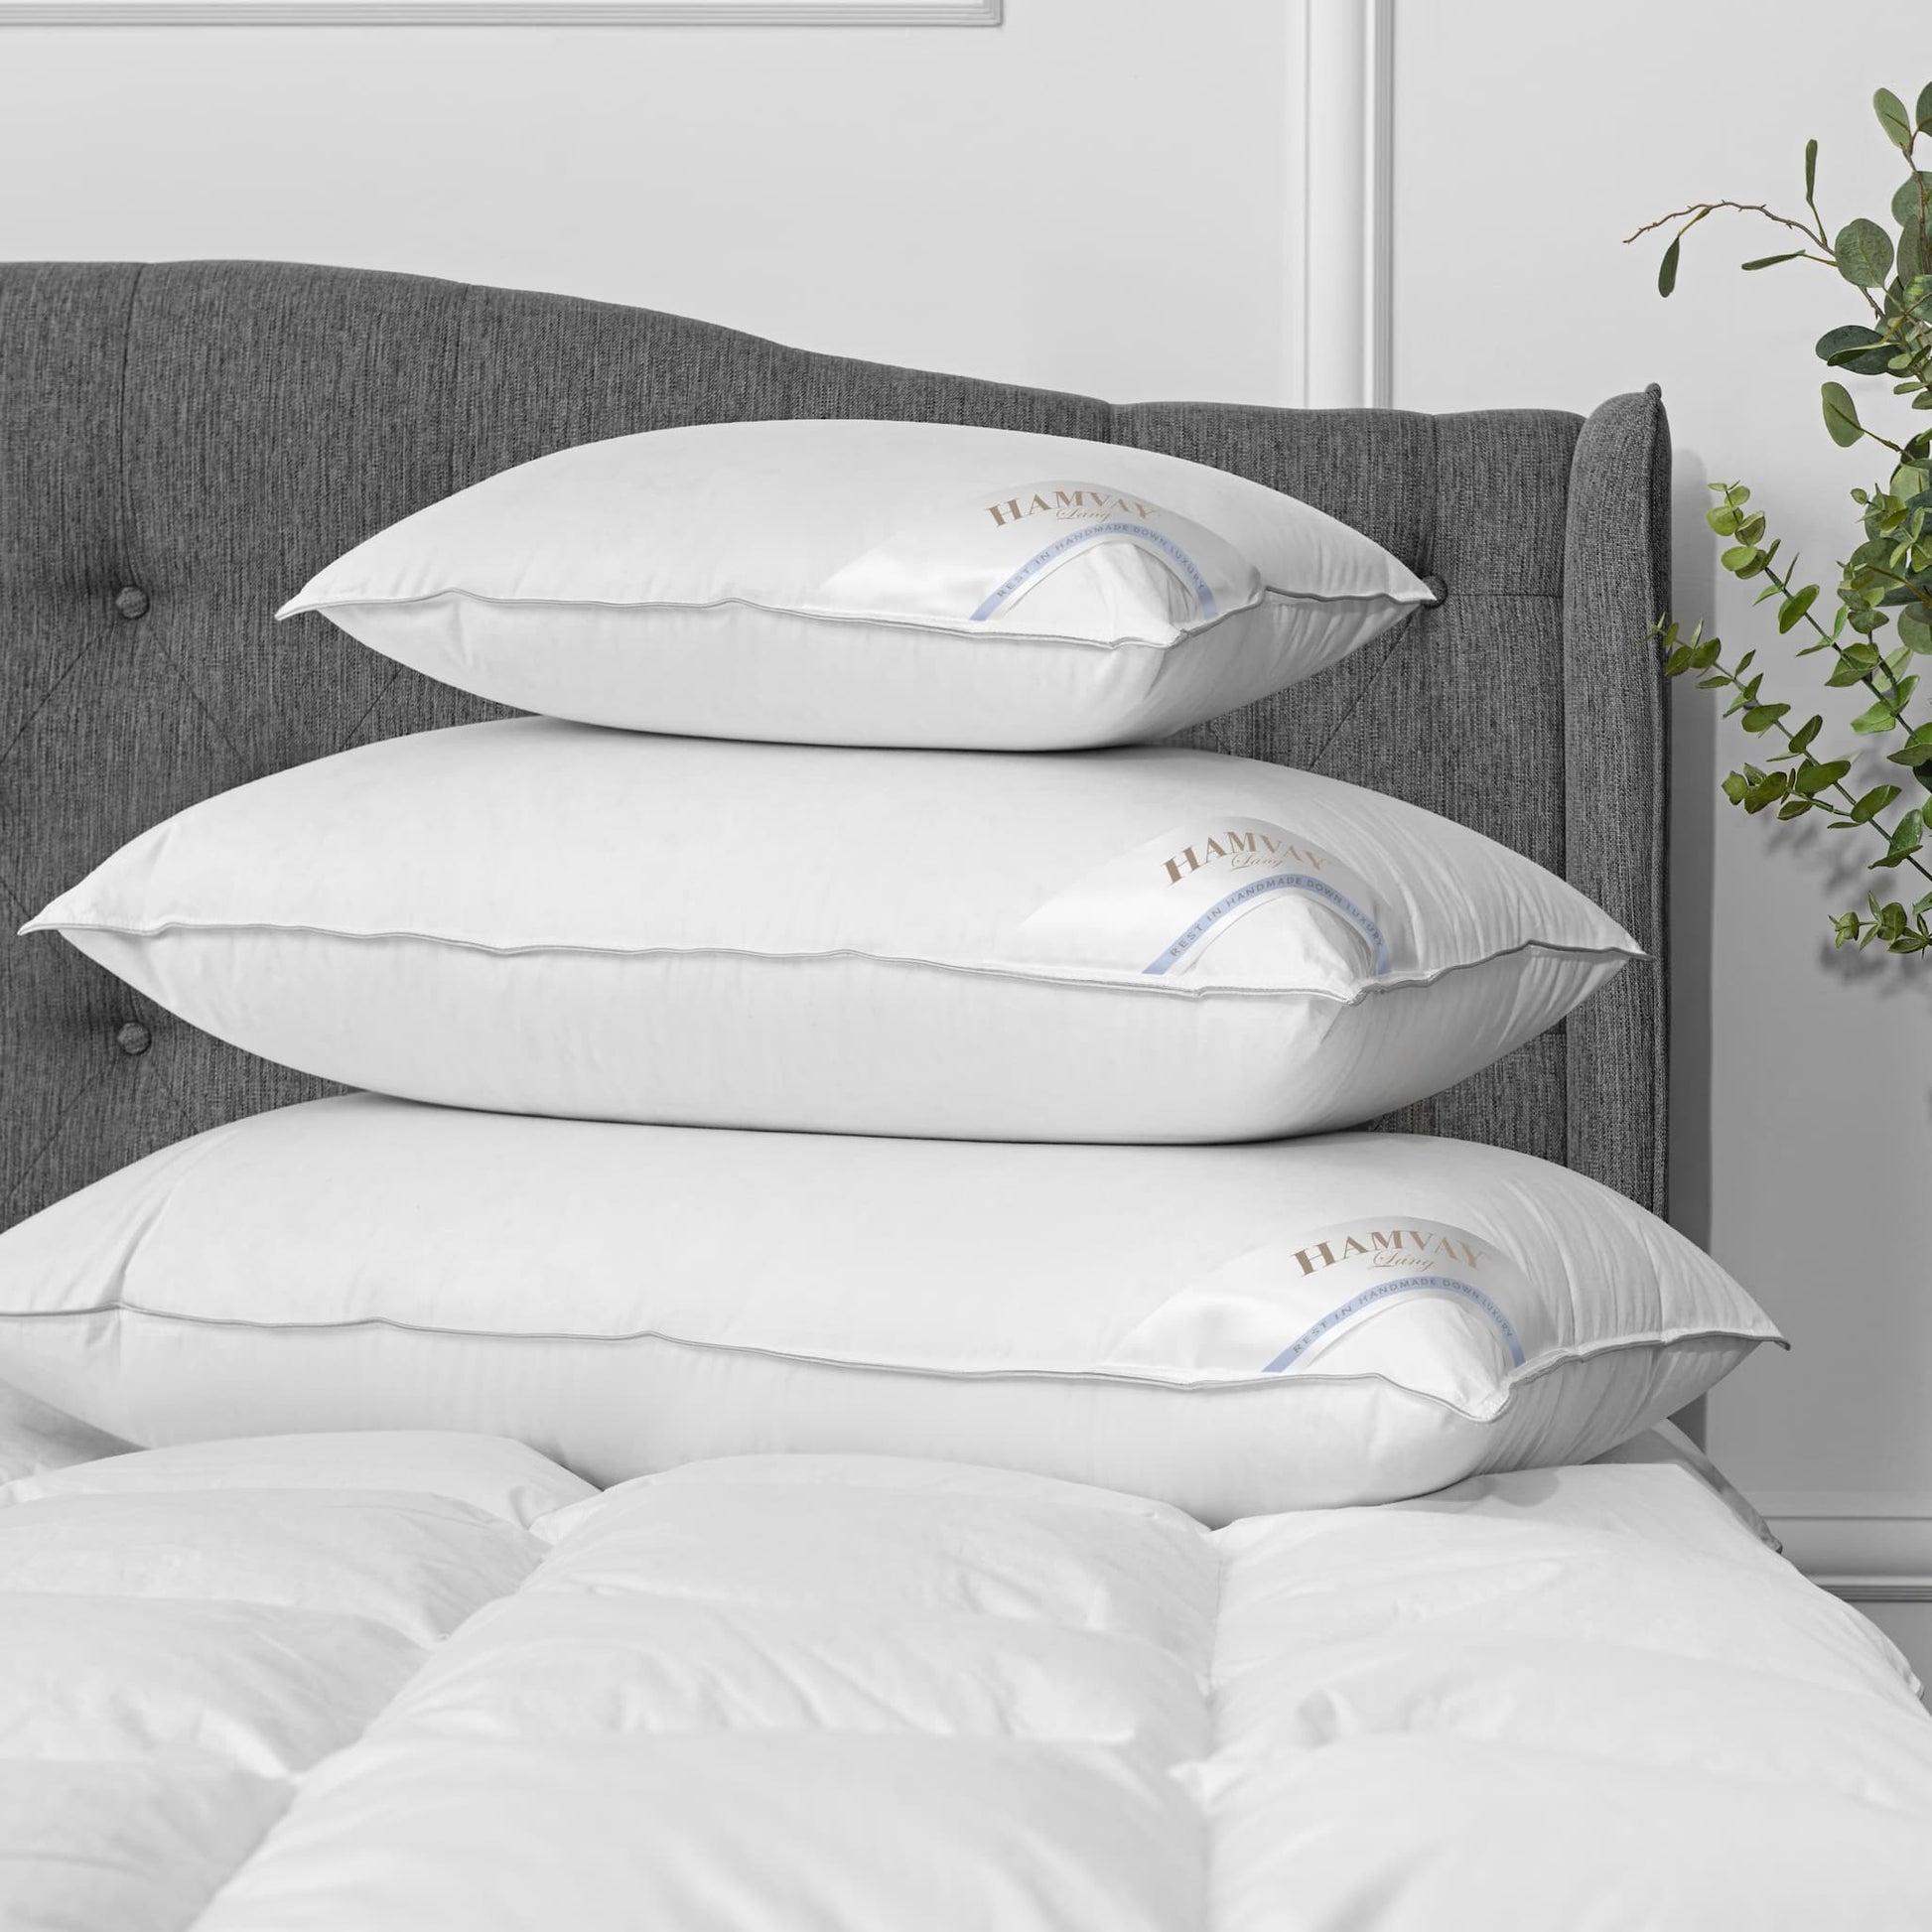 Pillow & Comforter Set